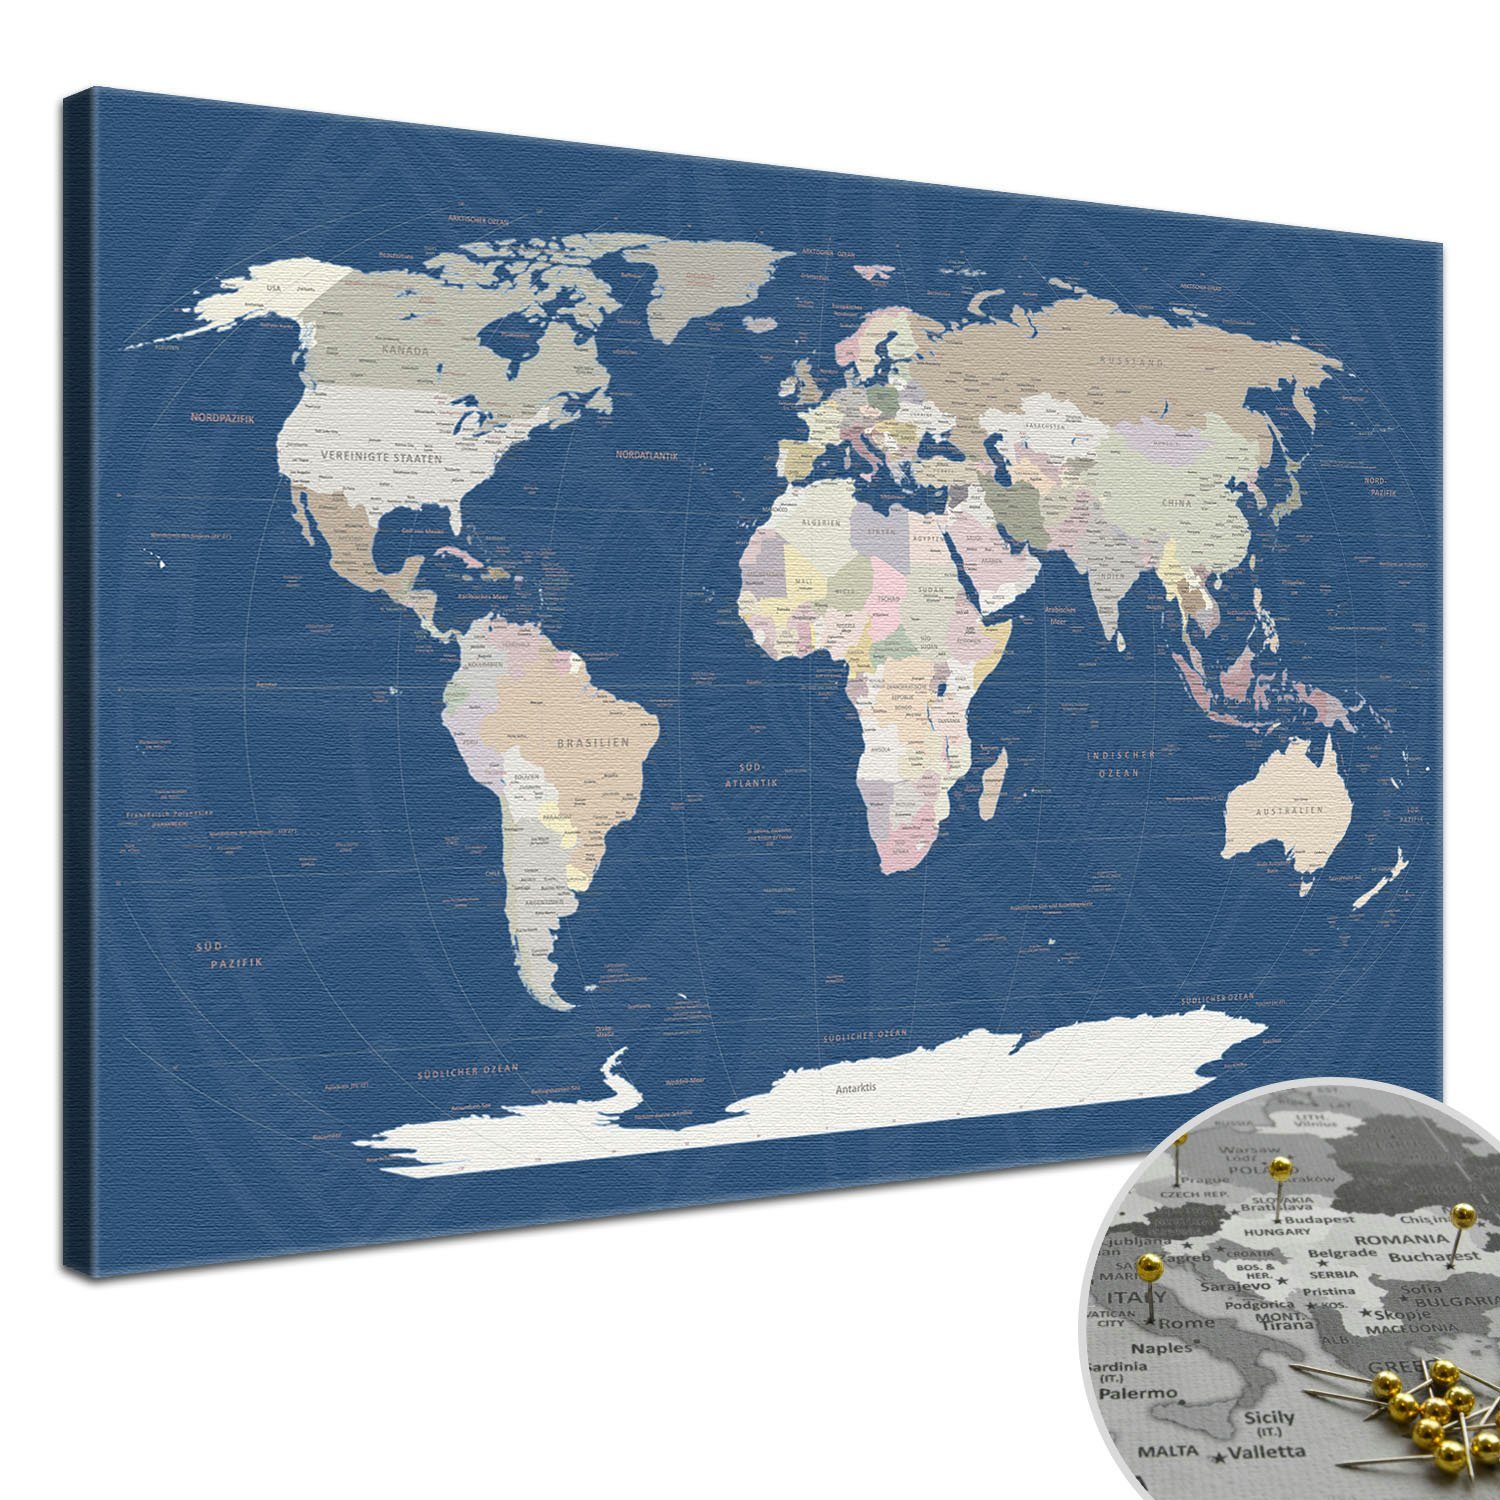 LANA KK Leinwandbild Weltkarte Pinnwand zum markieren von Reisezielen, deutsche Beschriftung Titan